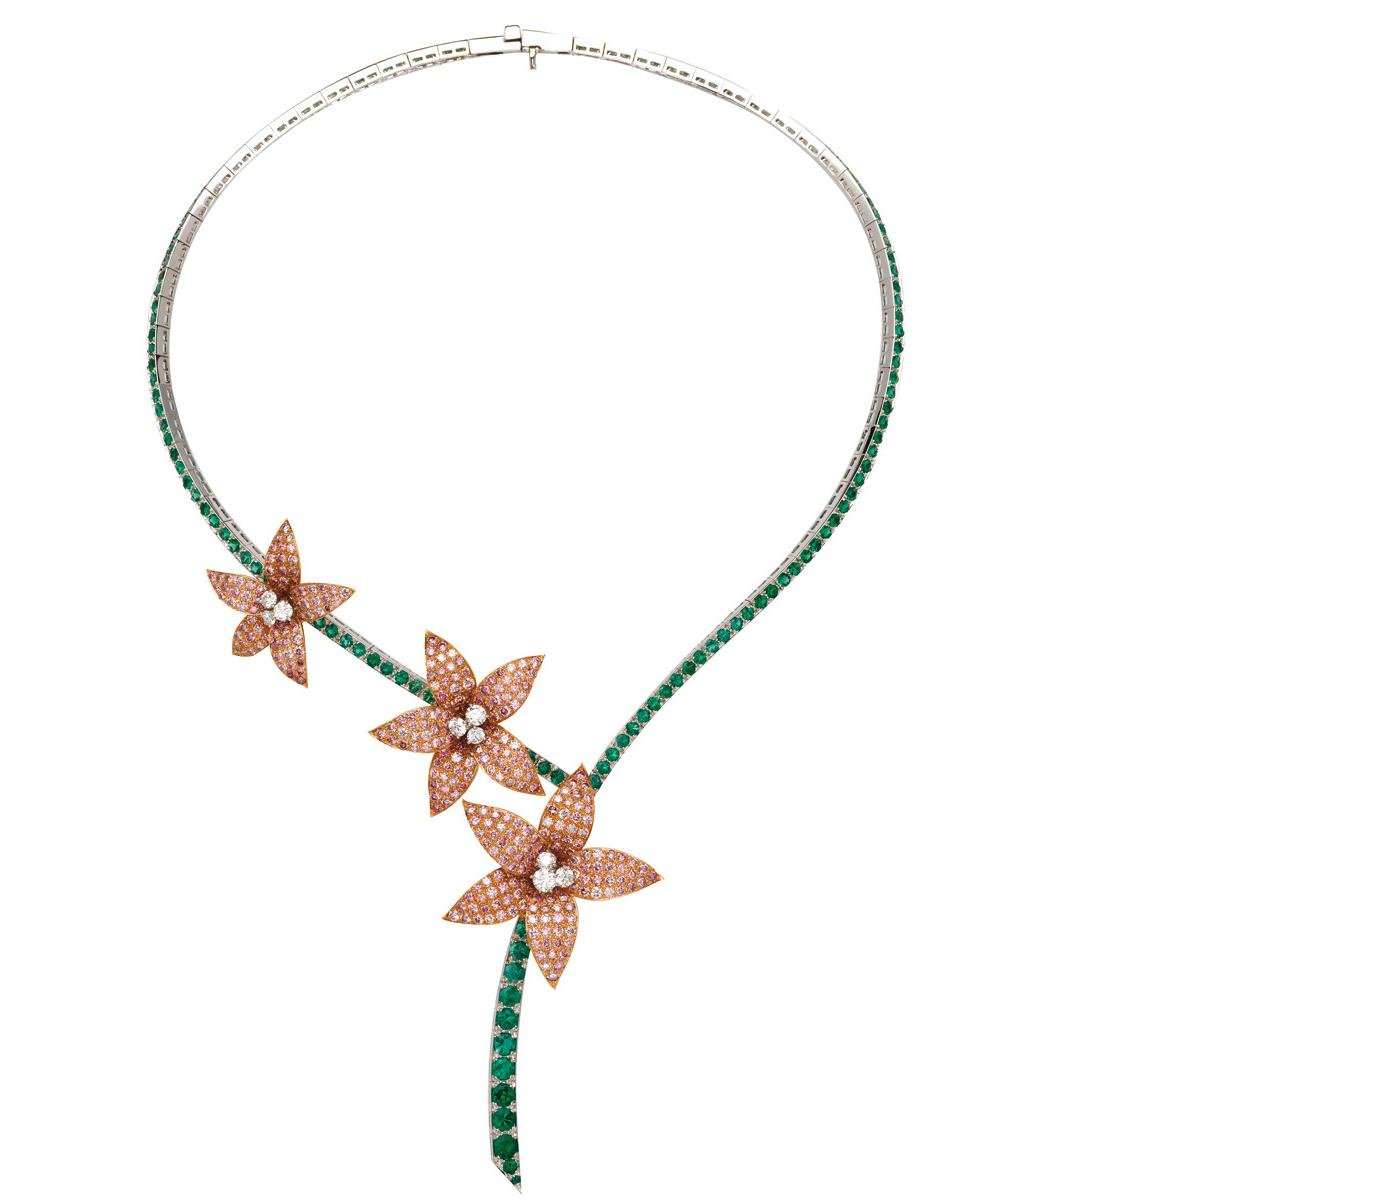 Necklace by Van Cleef & Arpels